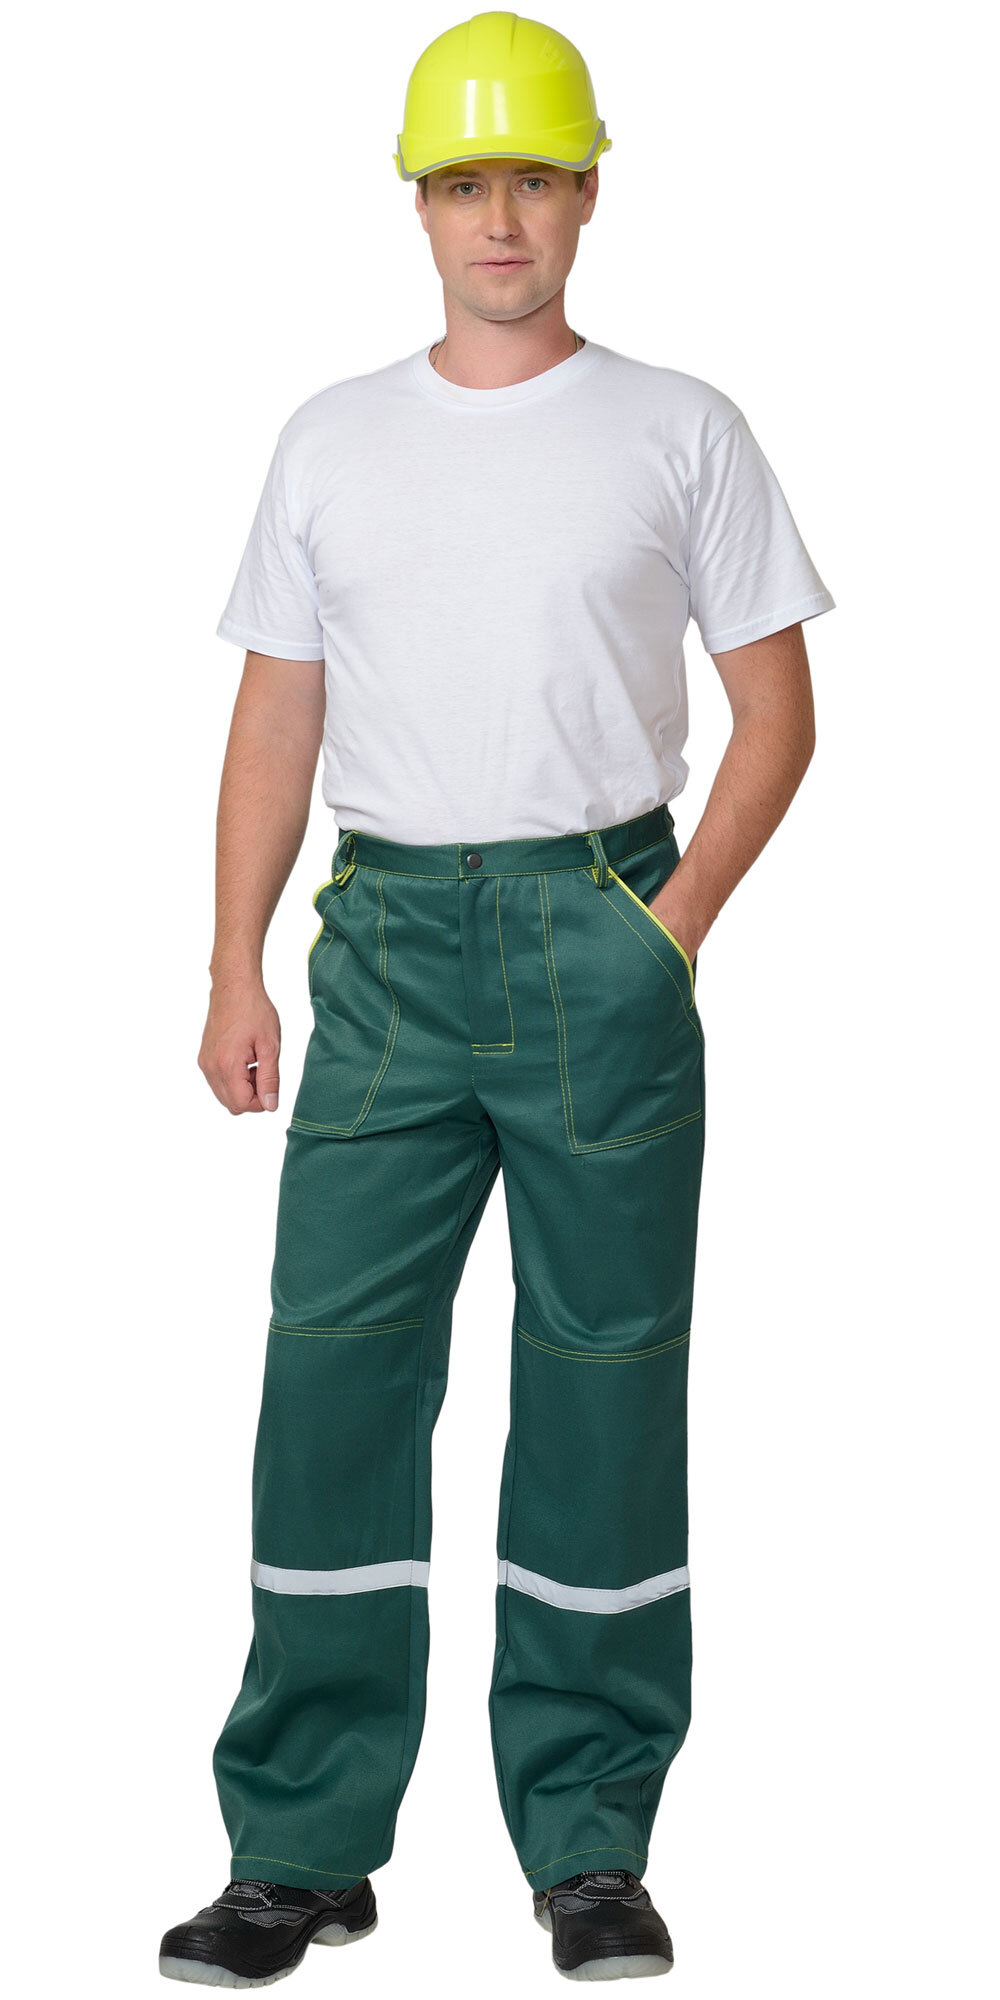 Костюм "МЕХАНИК": куртка, брюки зелёный с жёлтым и СОП 25 мм.